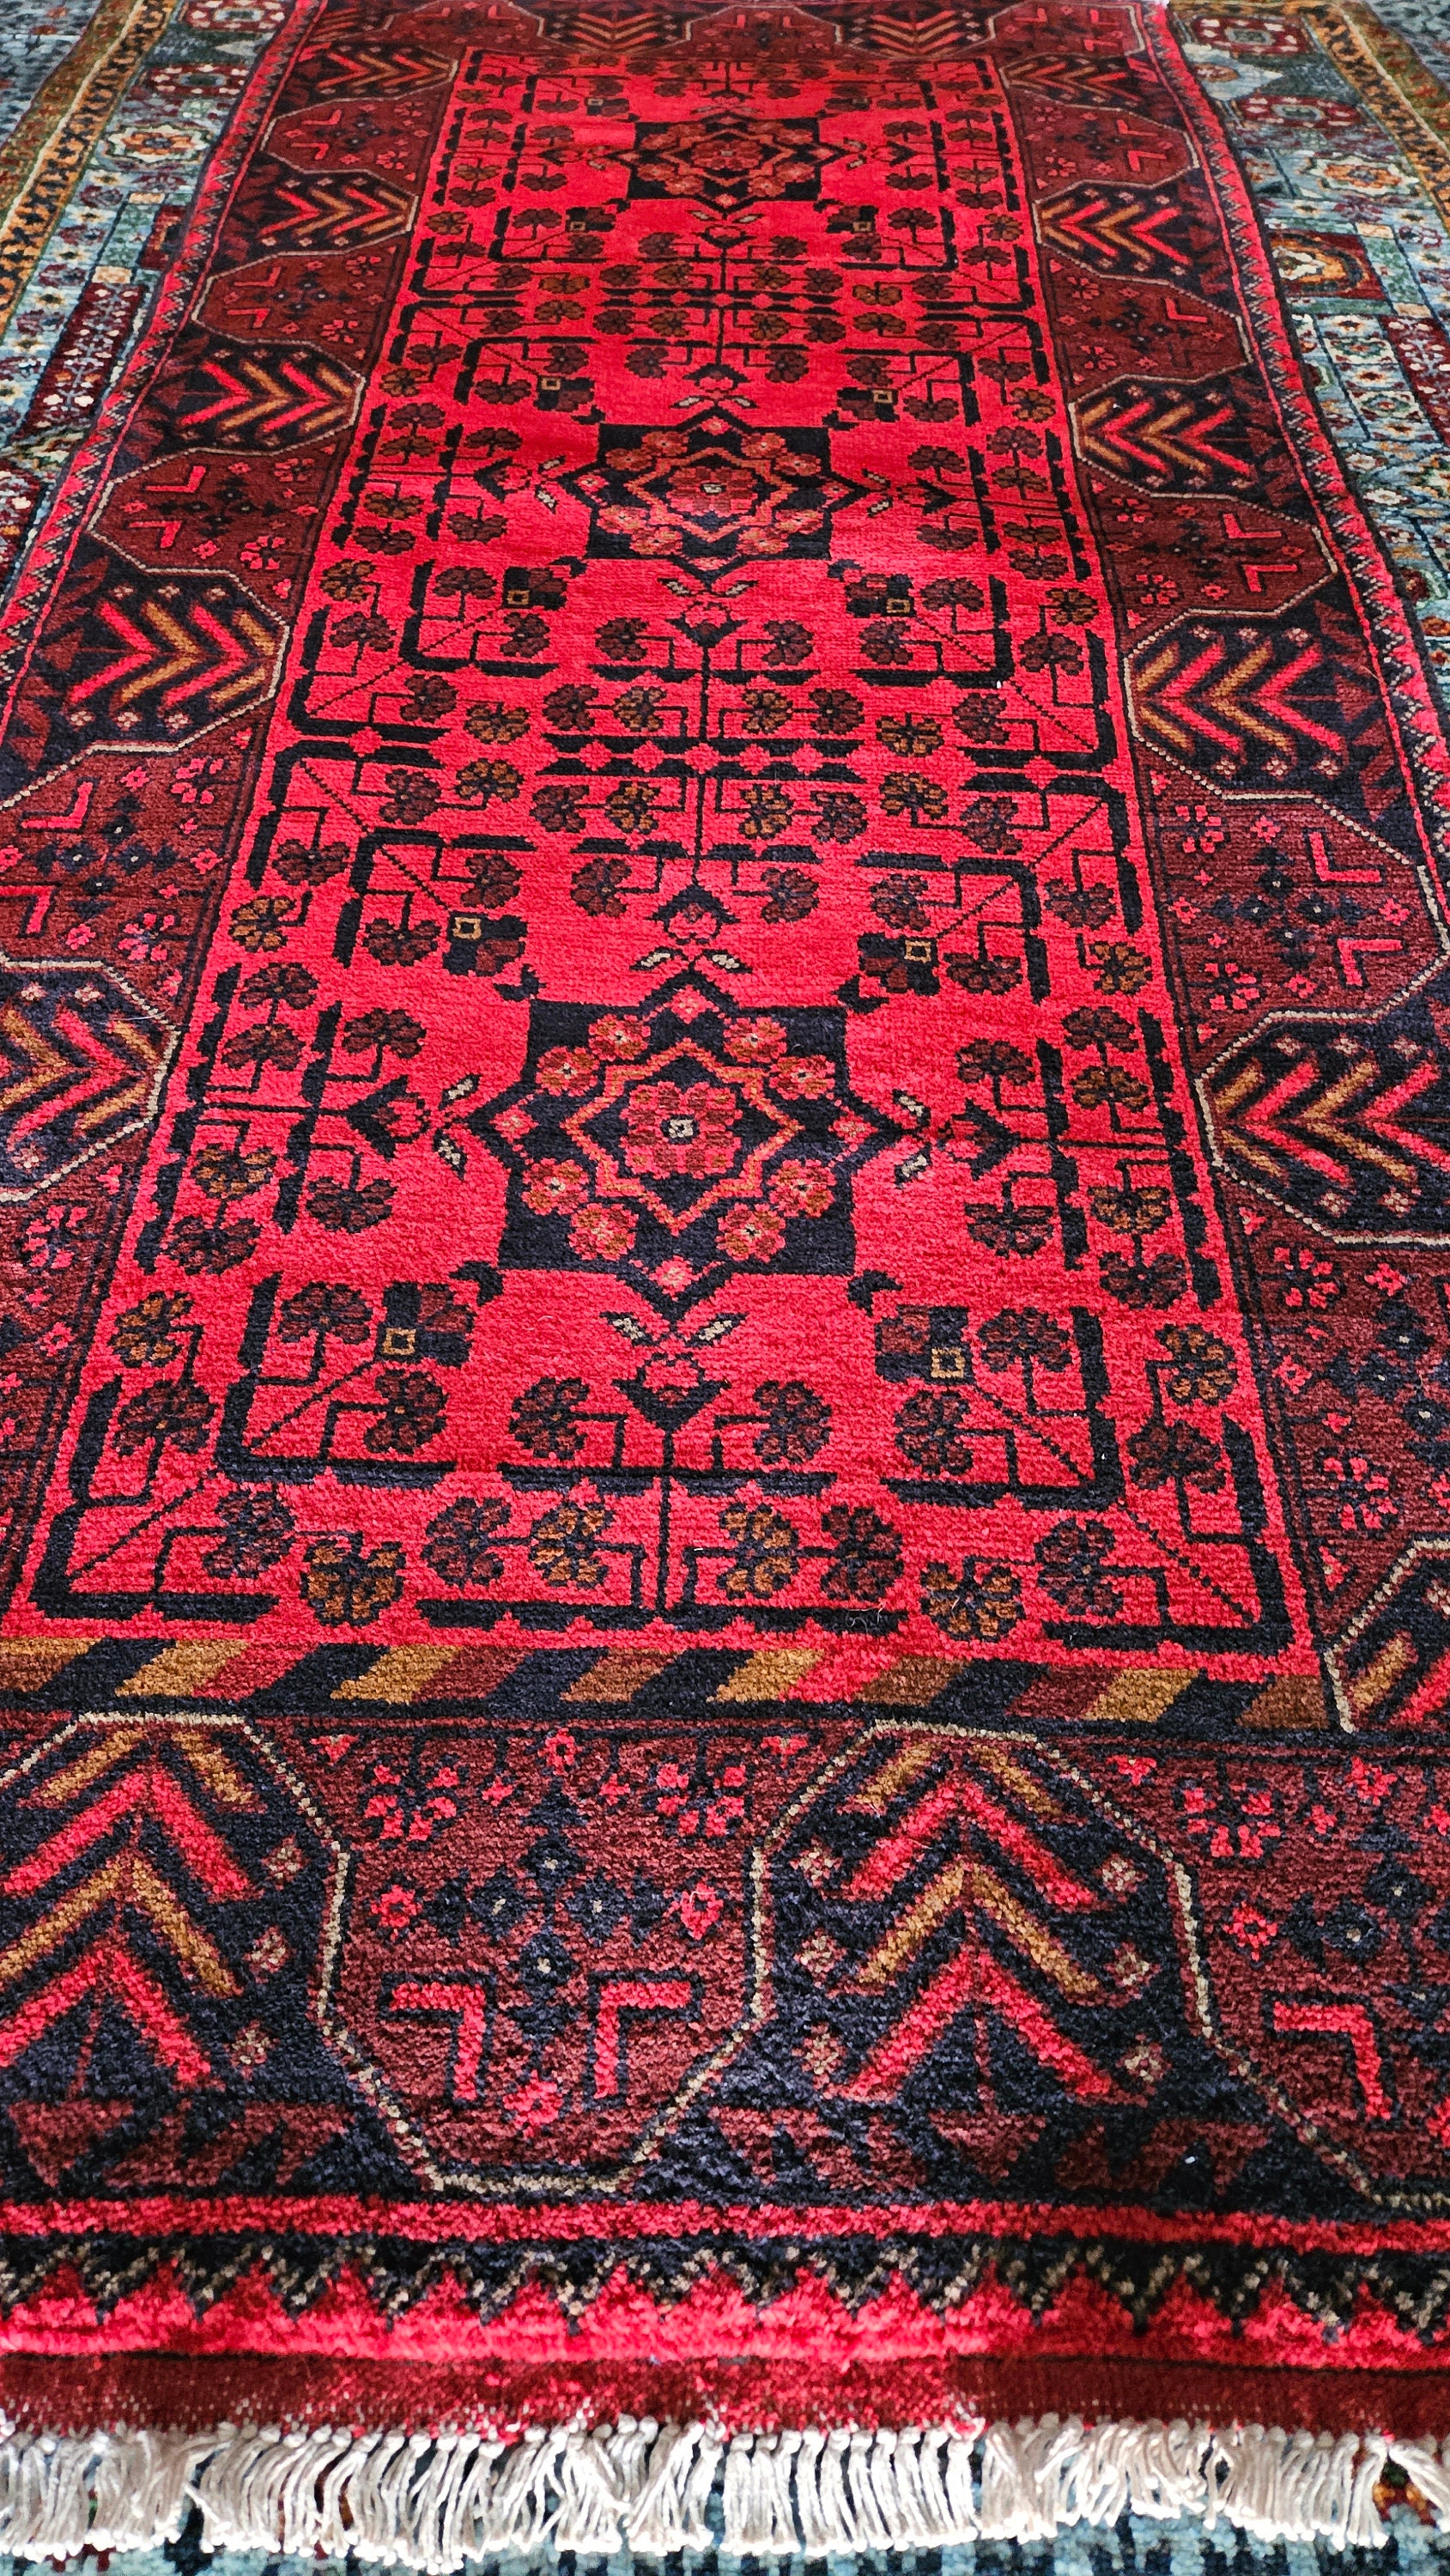 Excellent Afghan Handmade Rug, xmas, surya rugs, heriz rug, rustic home decor, rug pad, first home gift, bed plans, sumac rug, small rug